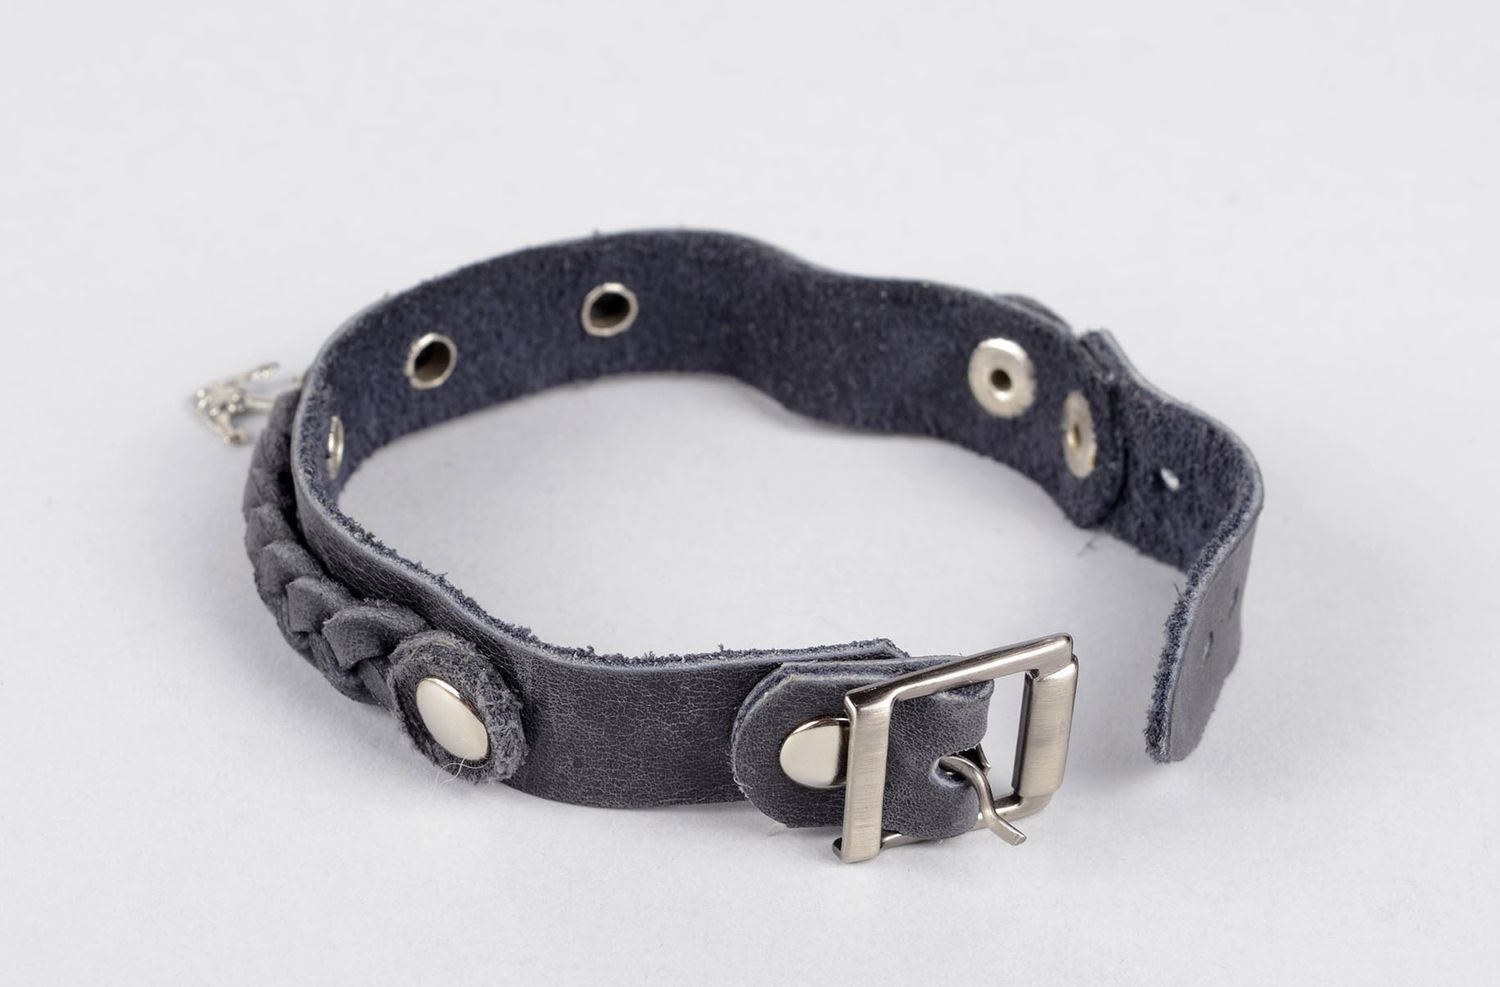 Stylish handmade leather bracelet fashion trends leather goods small gifts photo 3